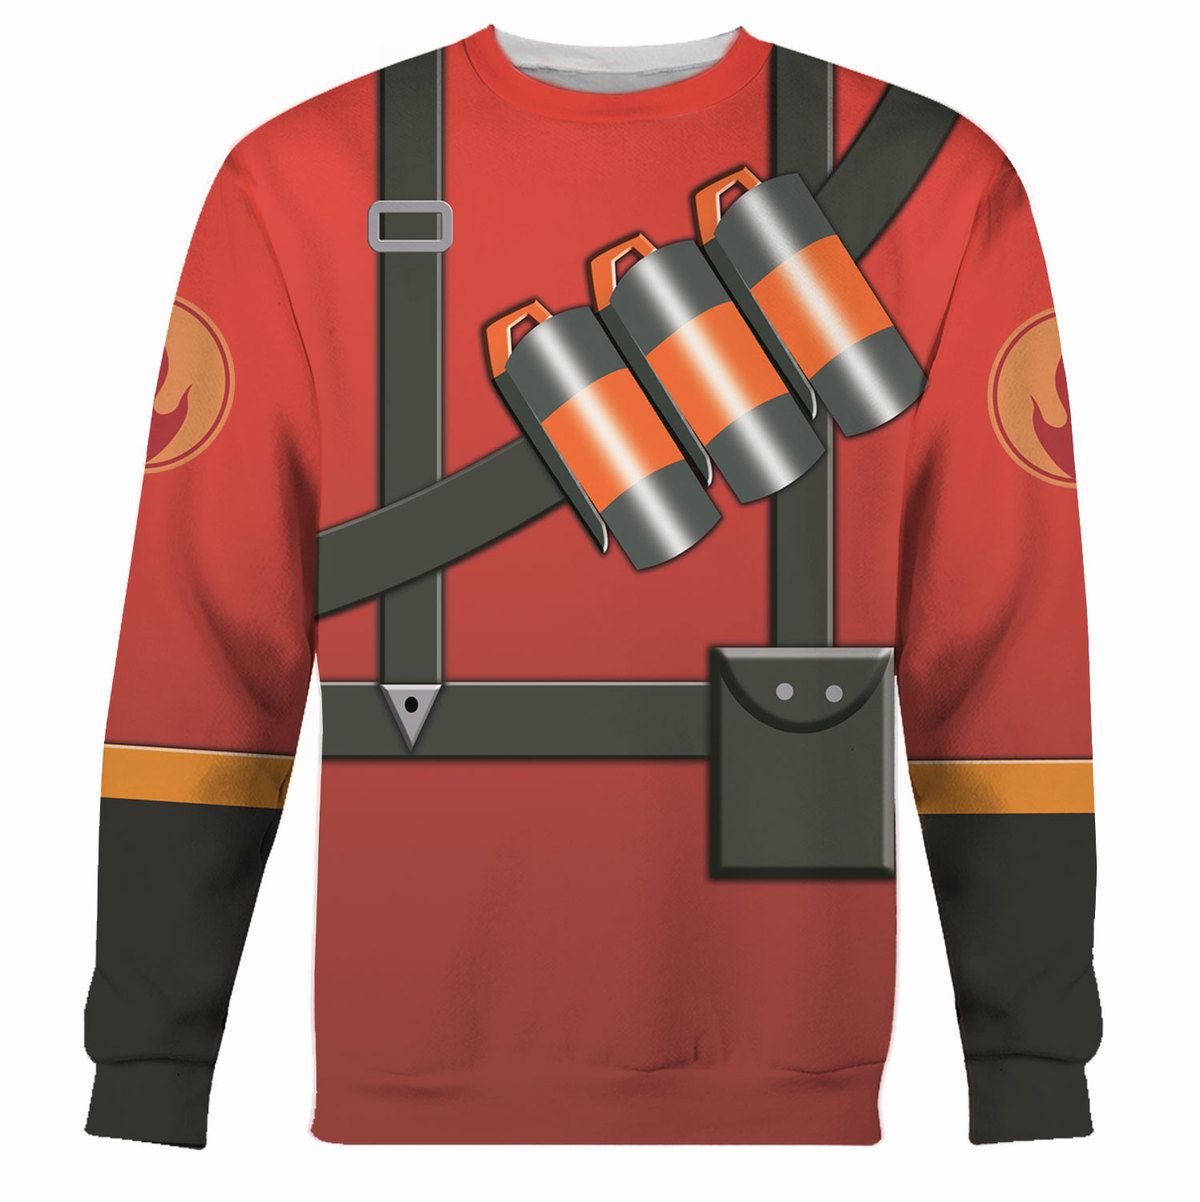 Pyro TF2 sweatshirt